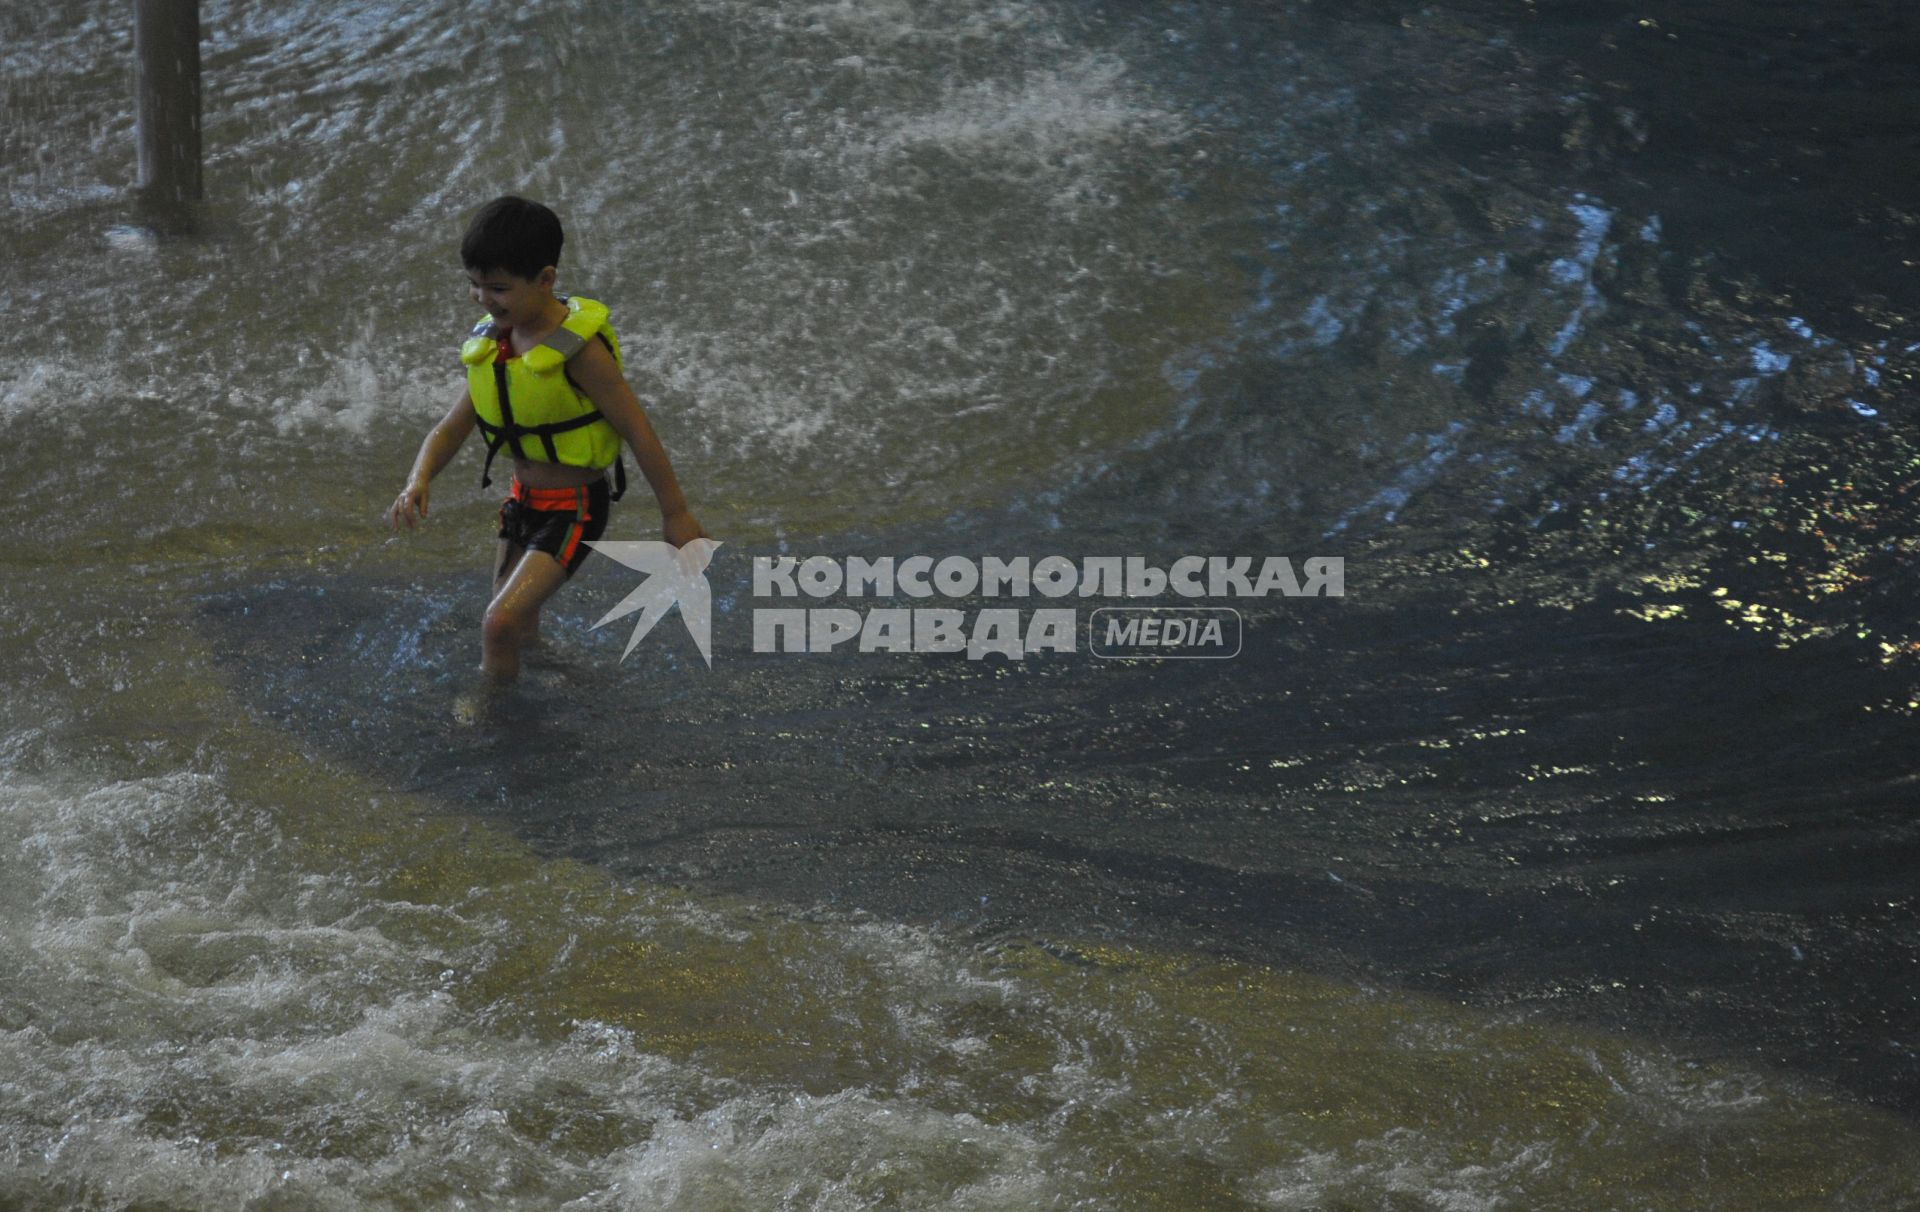 Аквапарк `Ква-ква-парк`, где 8 февраля утонул 9-летний школьник  Тимерлан Акамбаев. На снимке: ребенок с спасательном жилете.